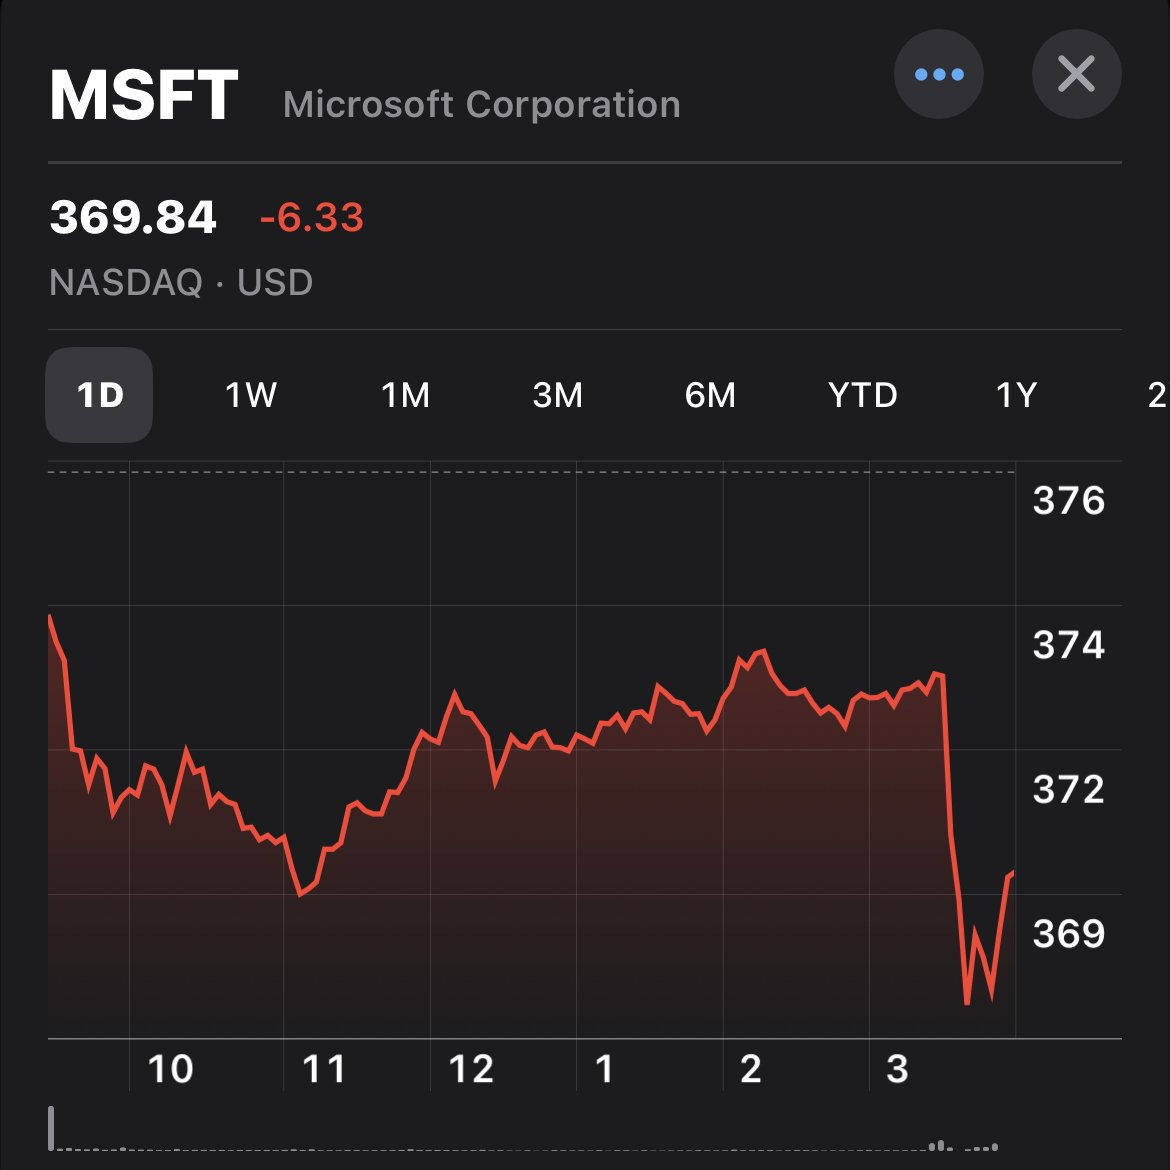 Microsoft’s stock falls after the surprise OpenAI boardroom press release.